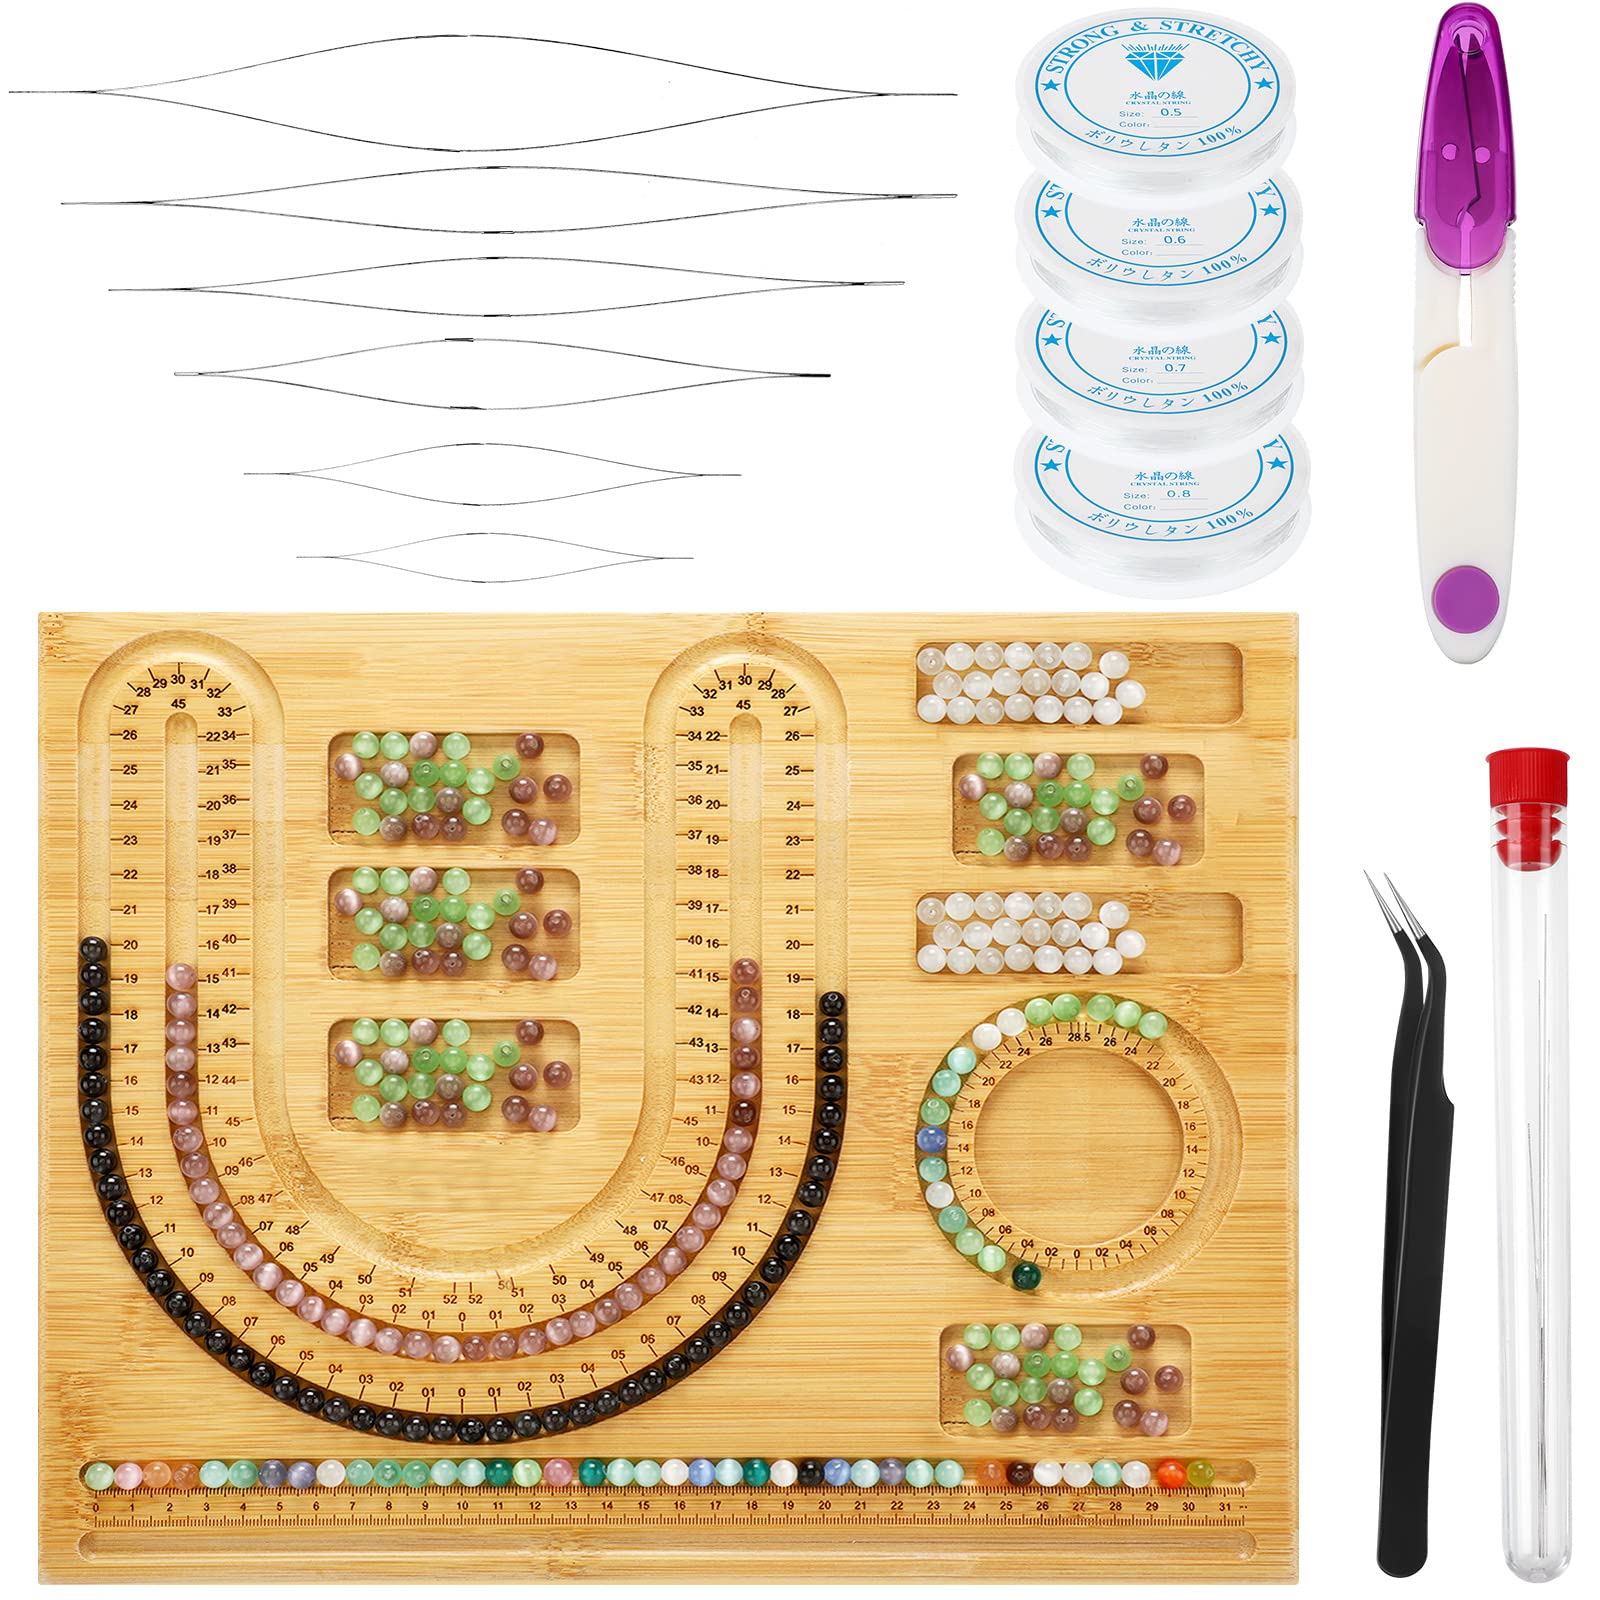 DoreenBeads Handamde Bead Mats Jewelry Beading Tools At Random DIY Making  Jewelry Findings 30cm(11 6/8) x 23cm(9), 2PCs - AliExpress